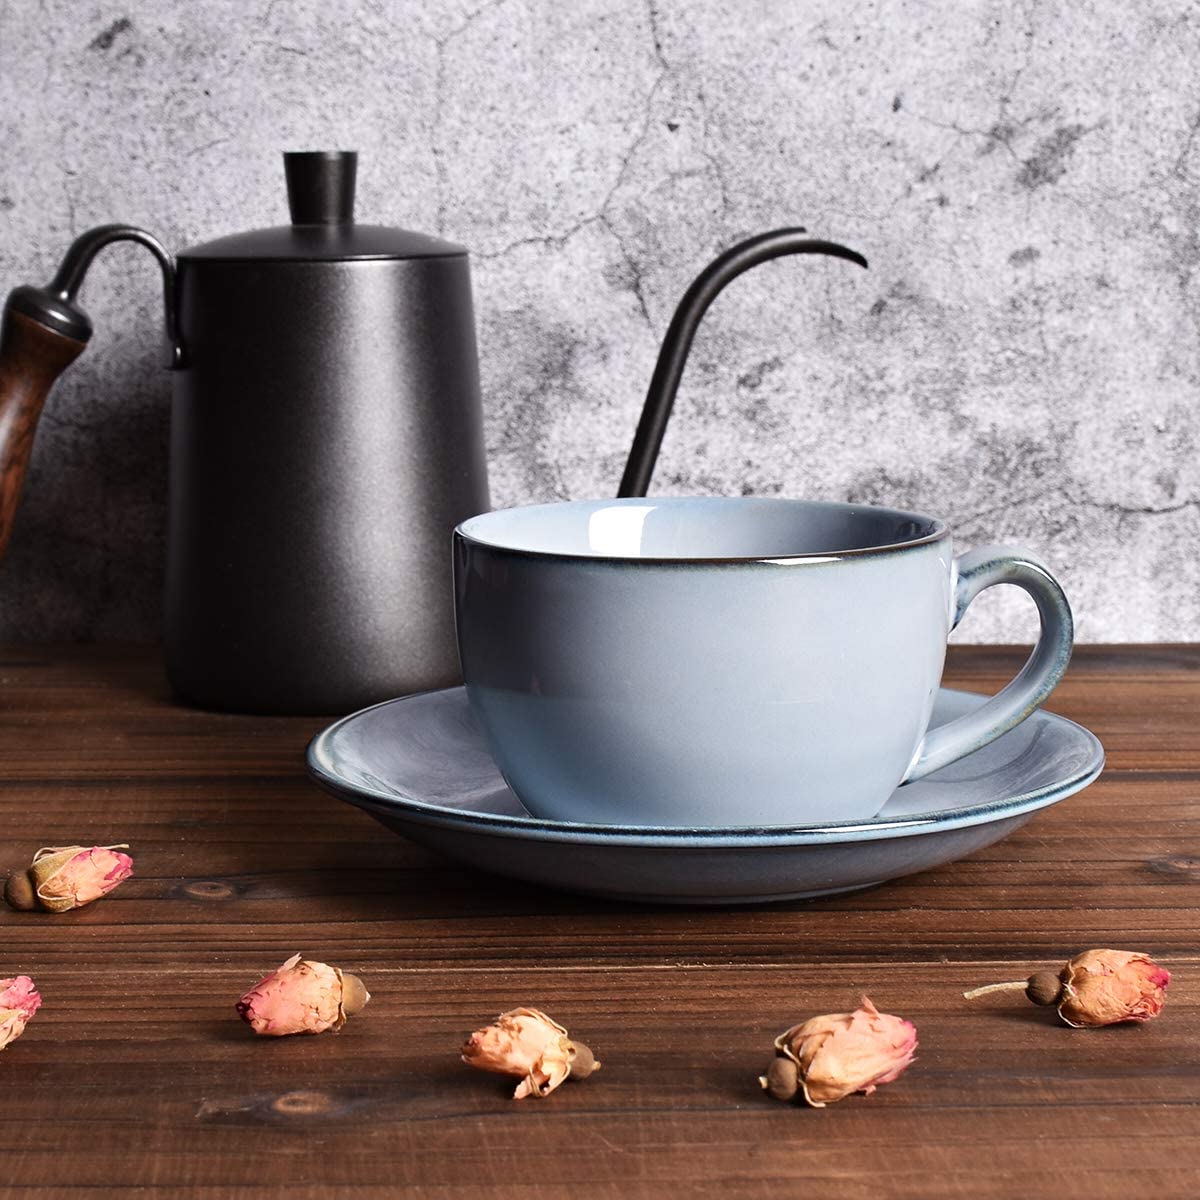 Bosmarlin Coffee Cup Mug with Saucer for Latte, Cappuccino, Tea, 8.5 Oz, Dishwasher and Microwave Safe, Reactive Glaze, 1 Pcs(Lake blue, 1)